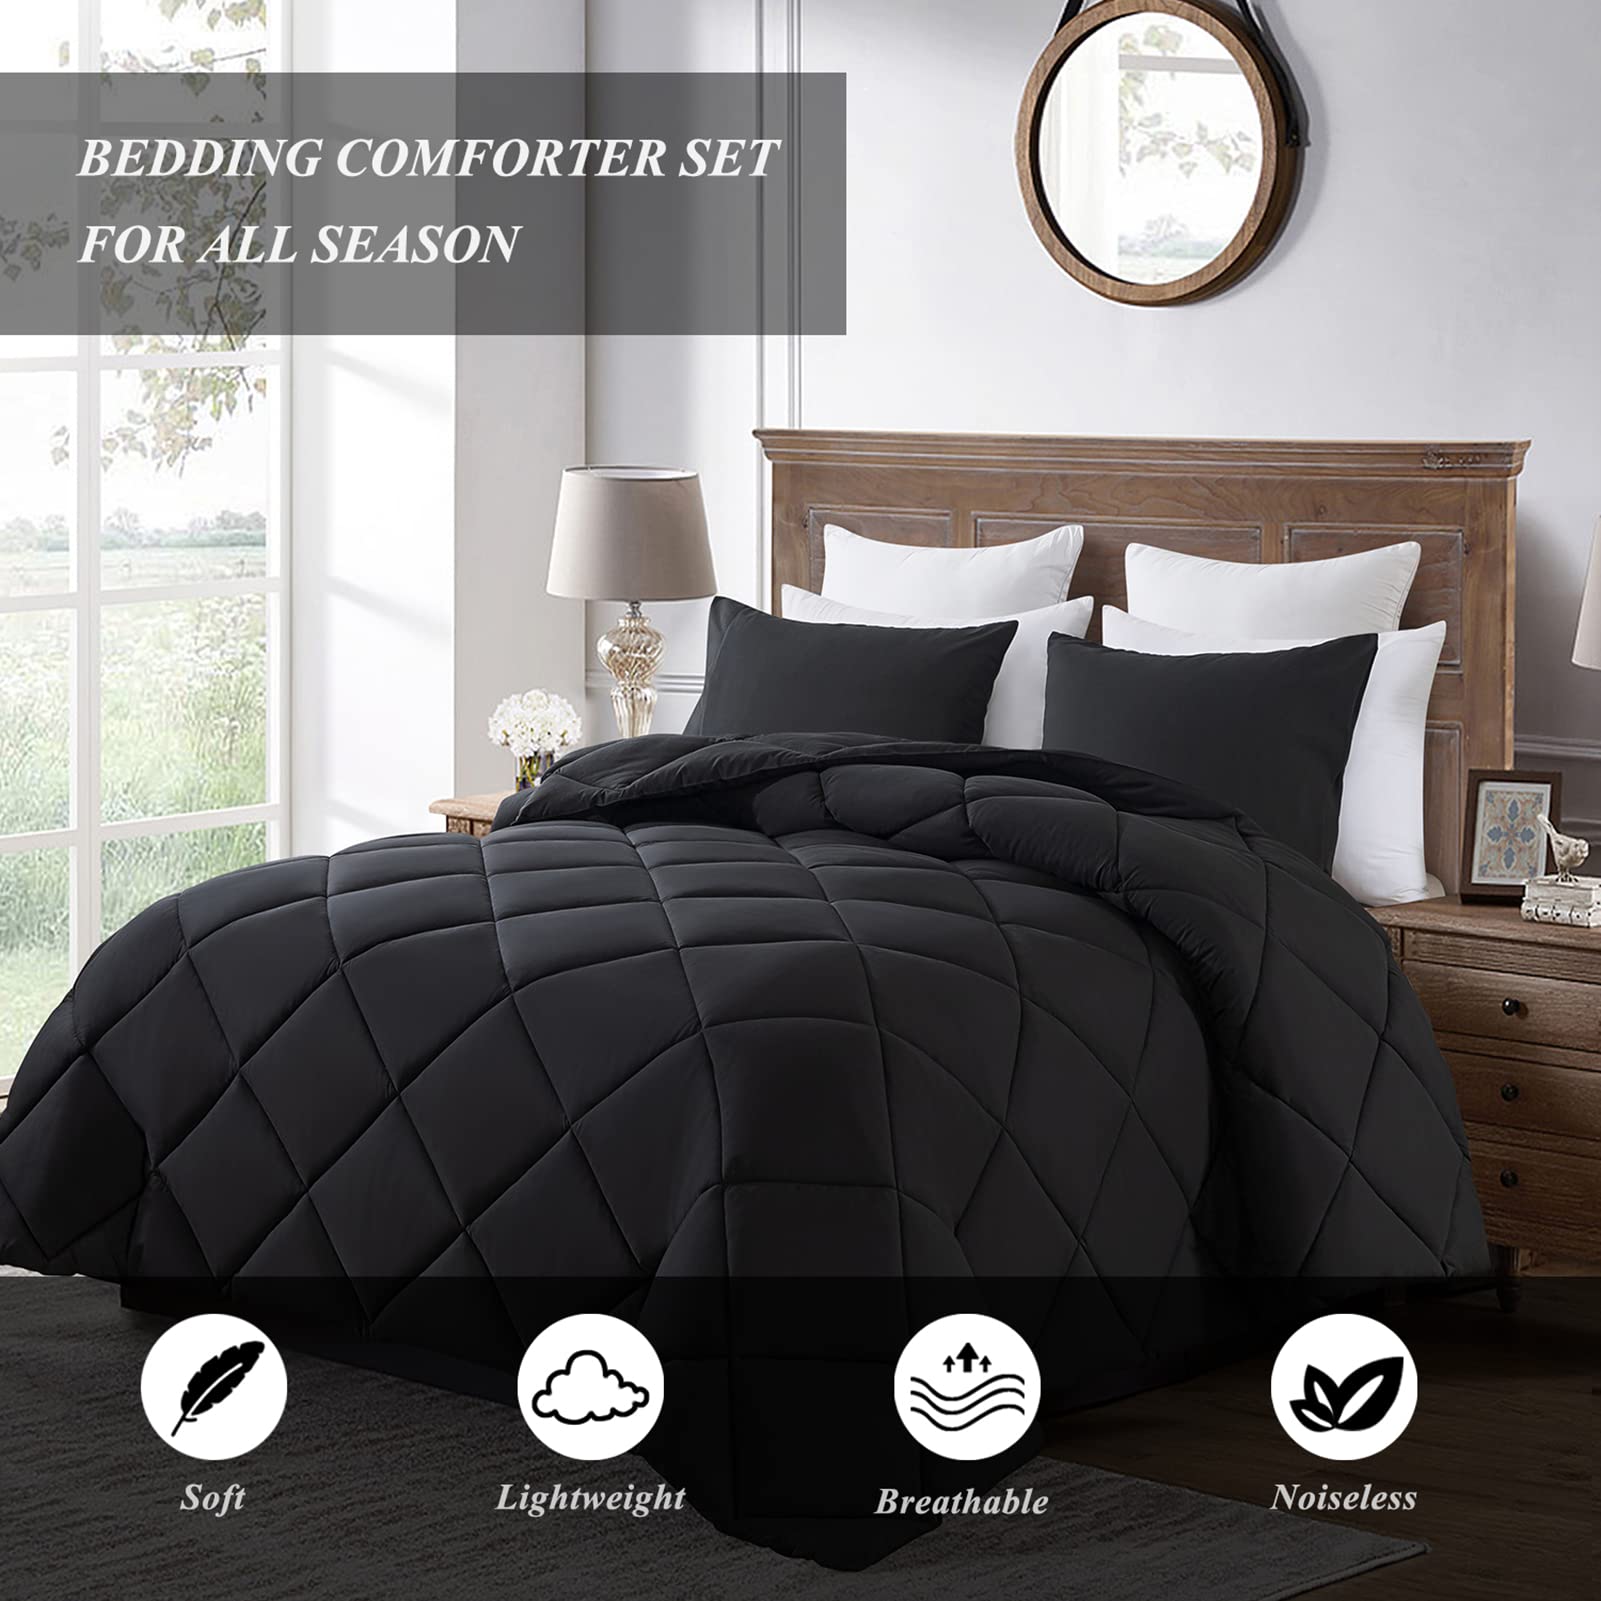 ELNIDO QUEEN Black King comforter Set with 2 Pillow Shams - 3 Pieces Bed comforter Set - Quilted Down Alternative comforter Set 